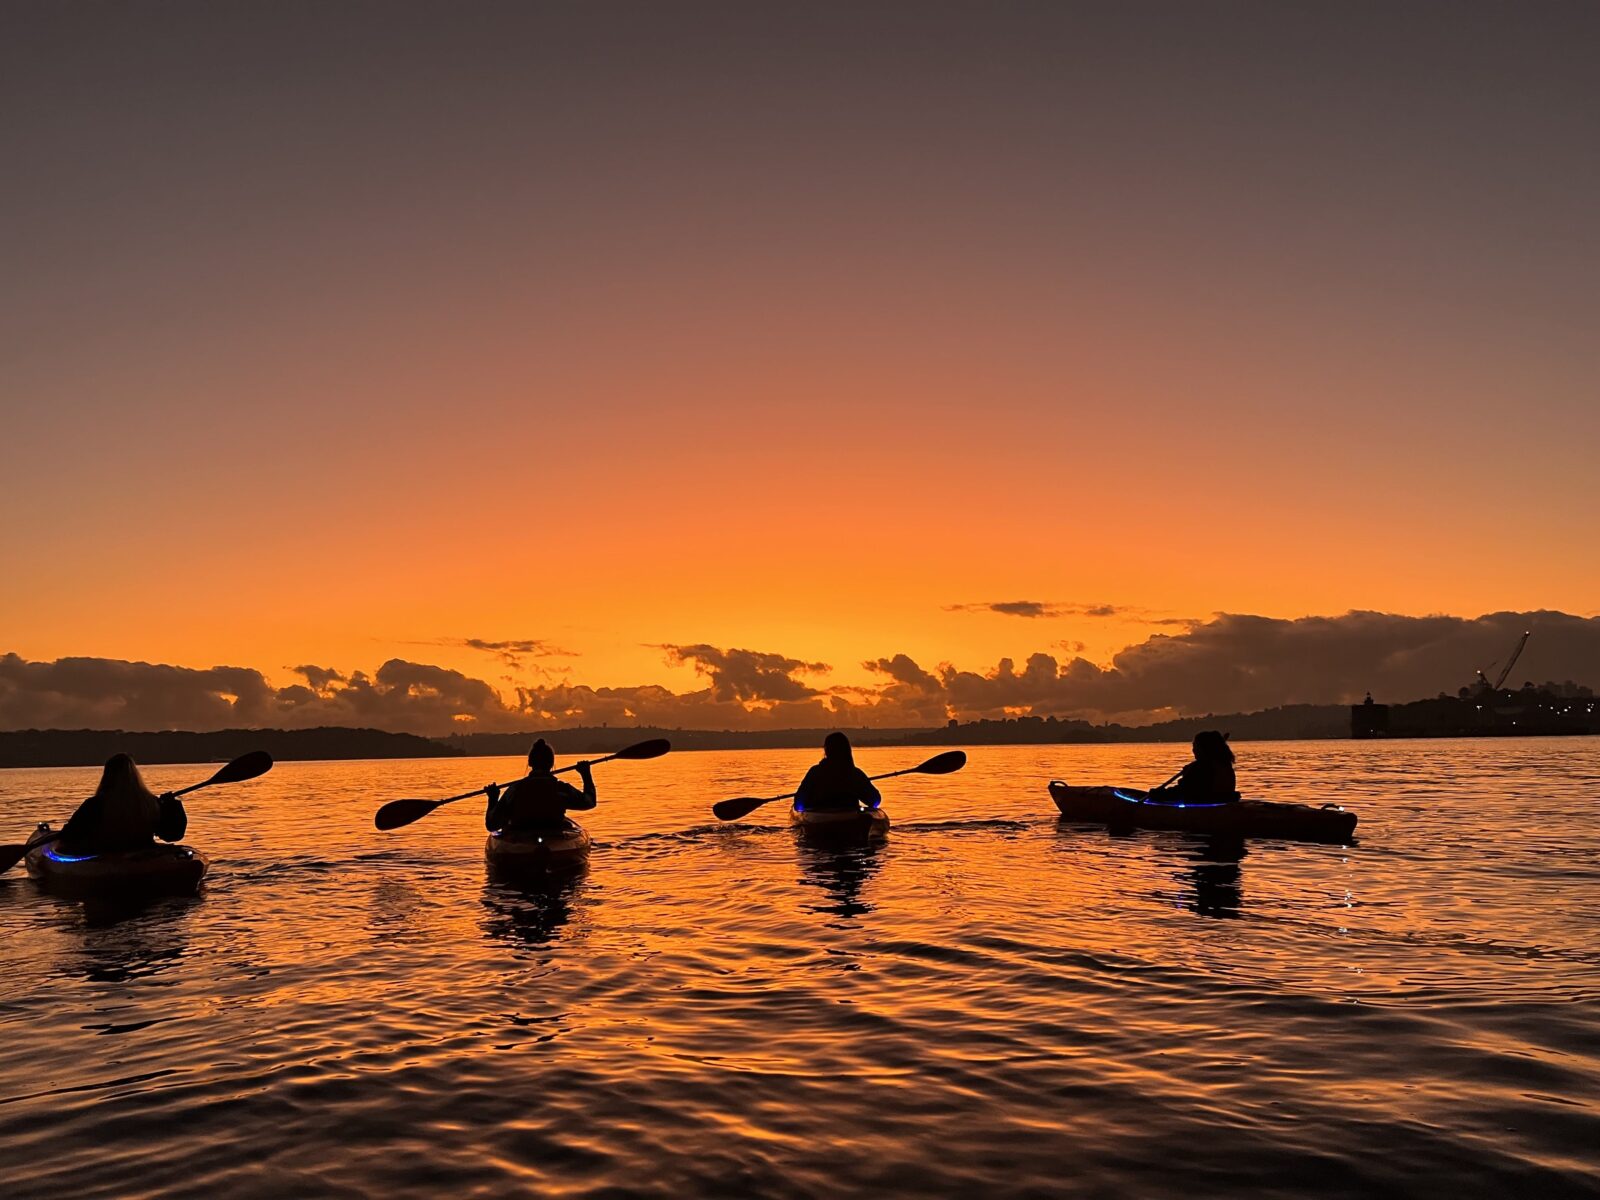 kayakers enjoying the first glowing orange rays of the sun